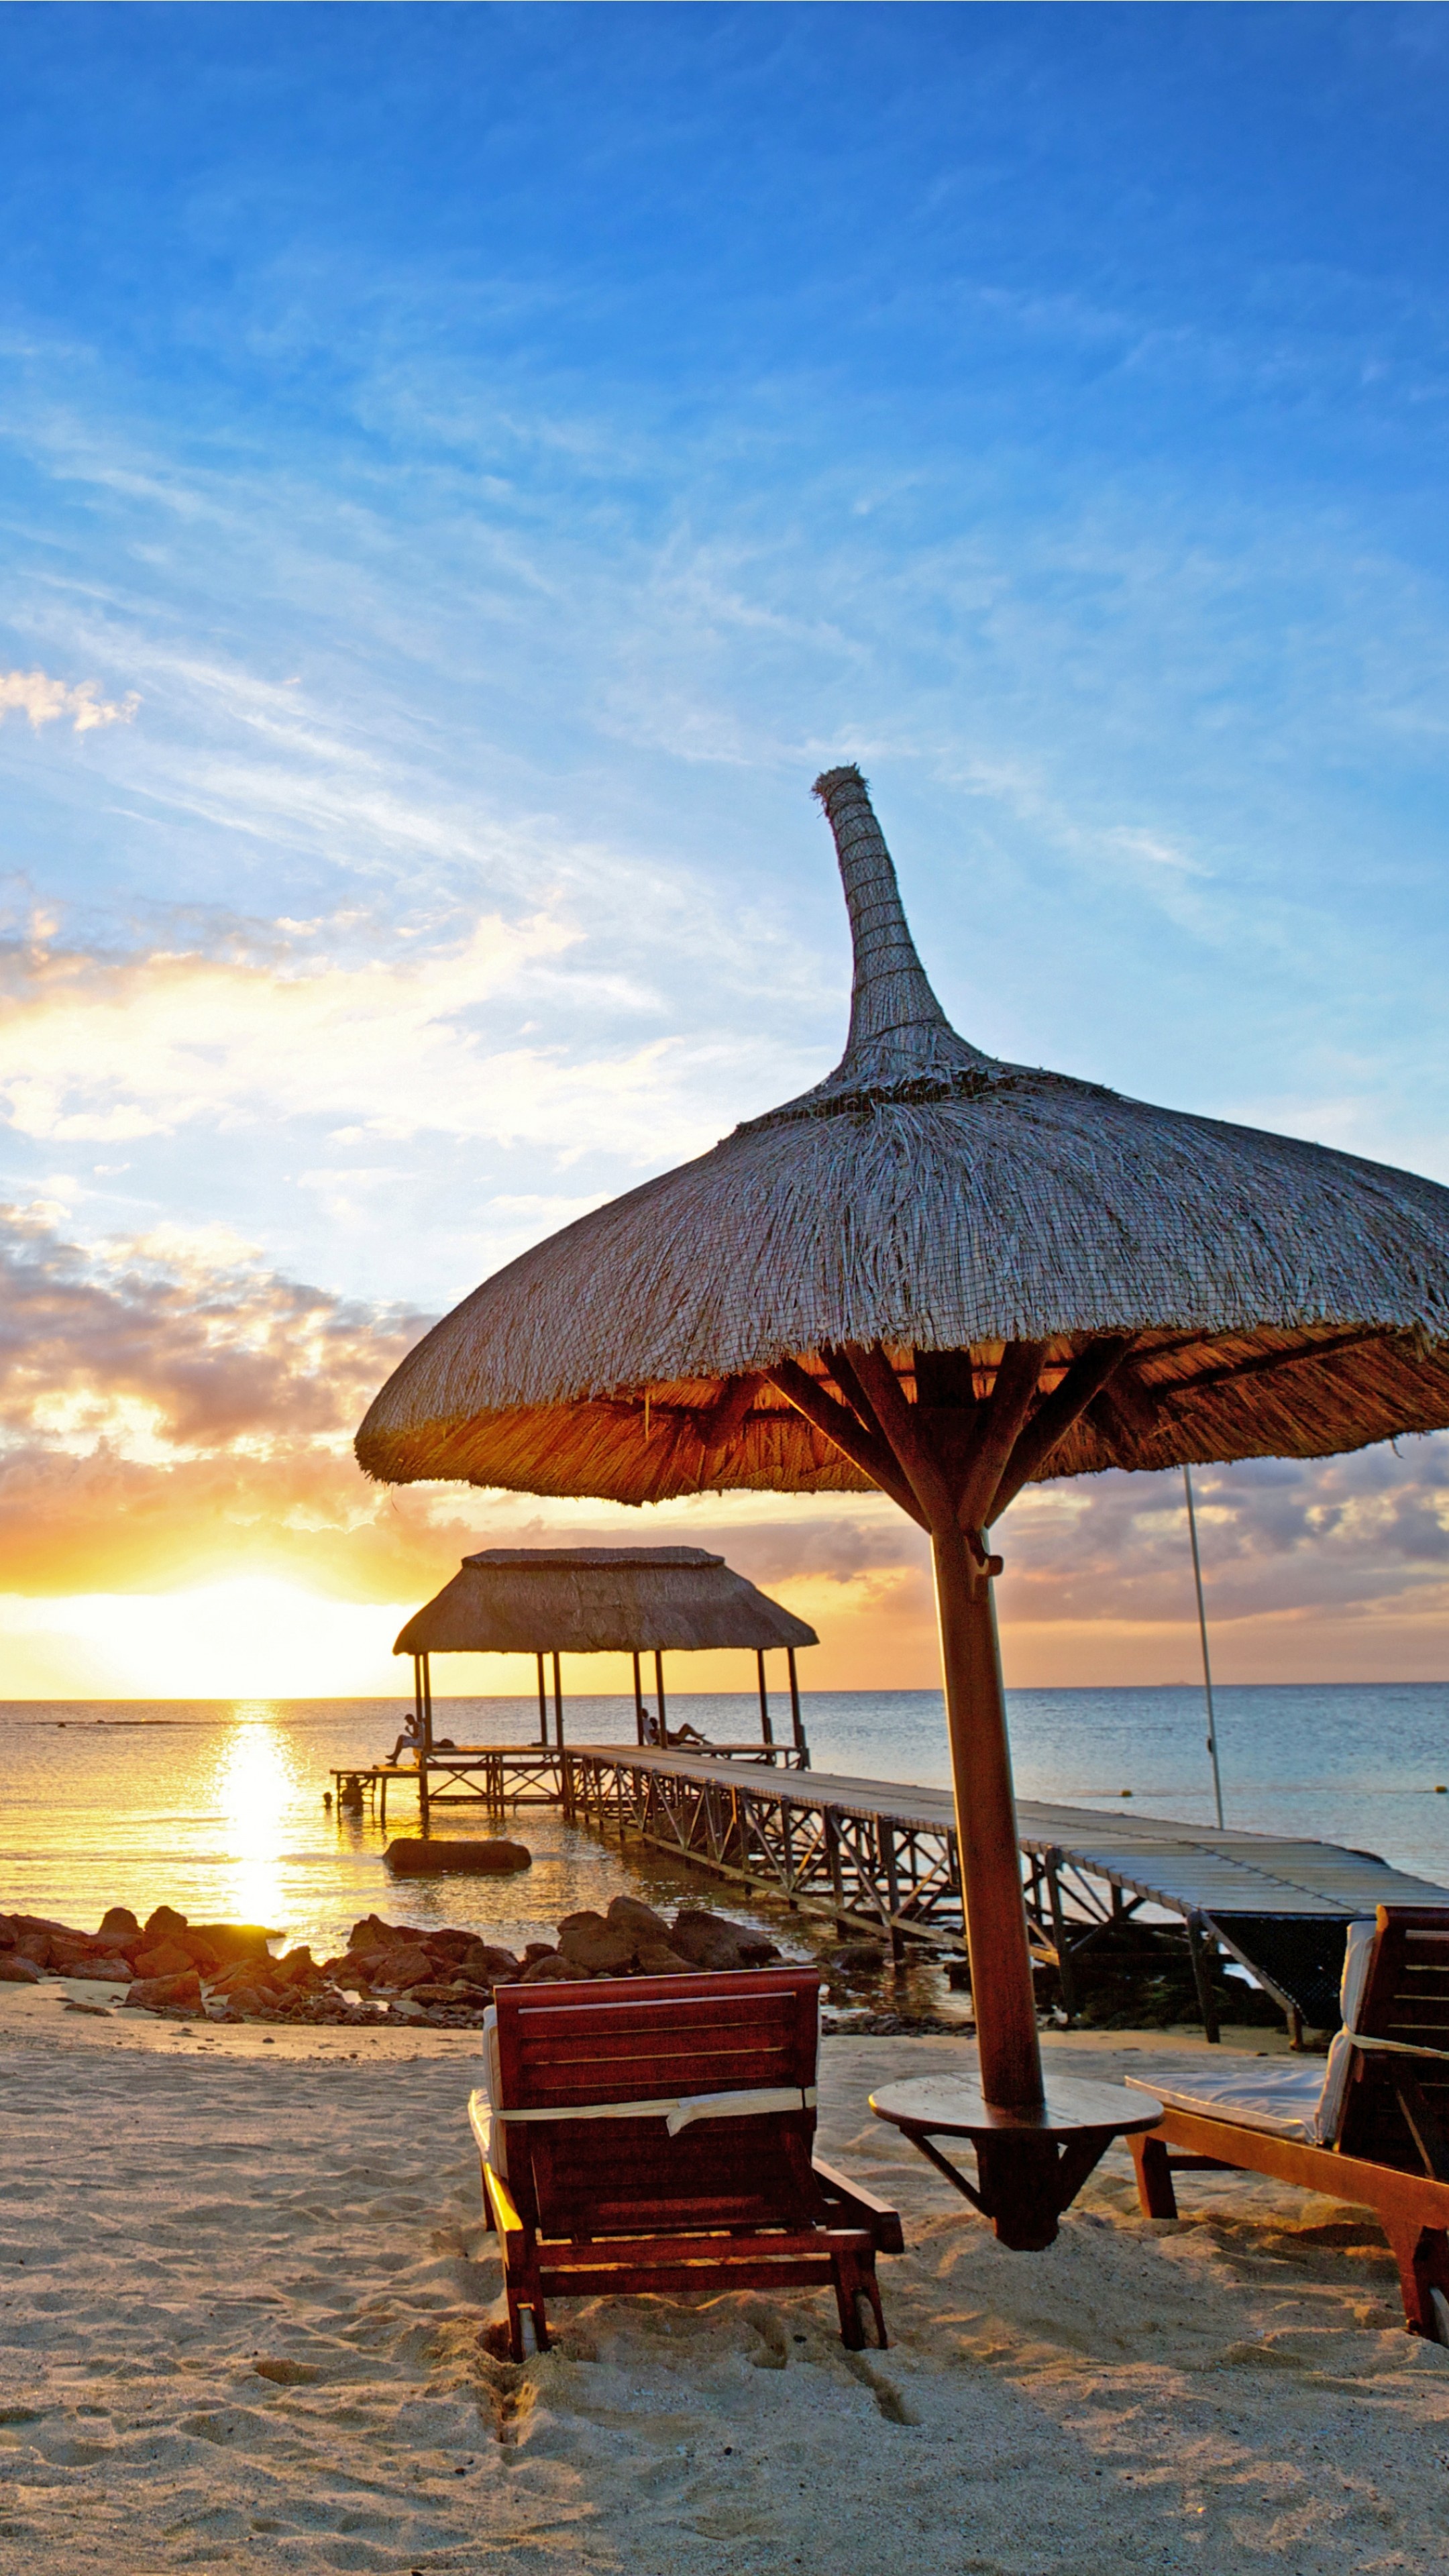 Beach Umbrella: Mauritius, Sunset, Indian Ocean, Sand, Parasol, Sand. 2160x3840 4K Background.